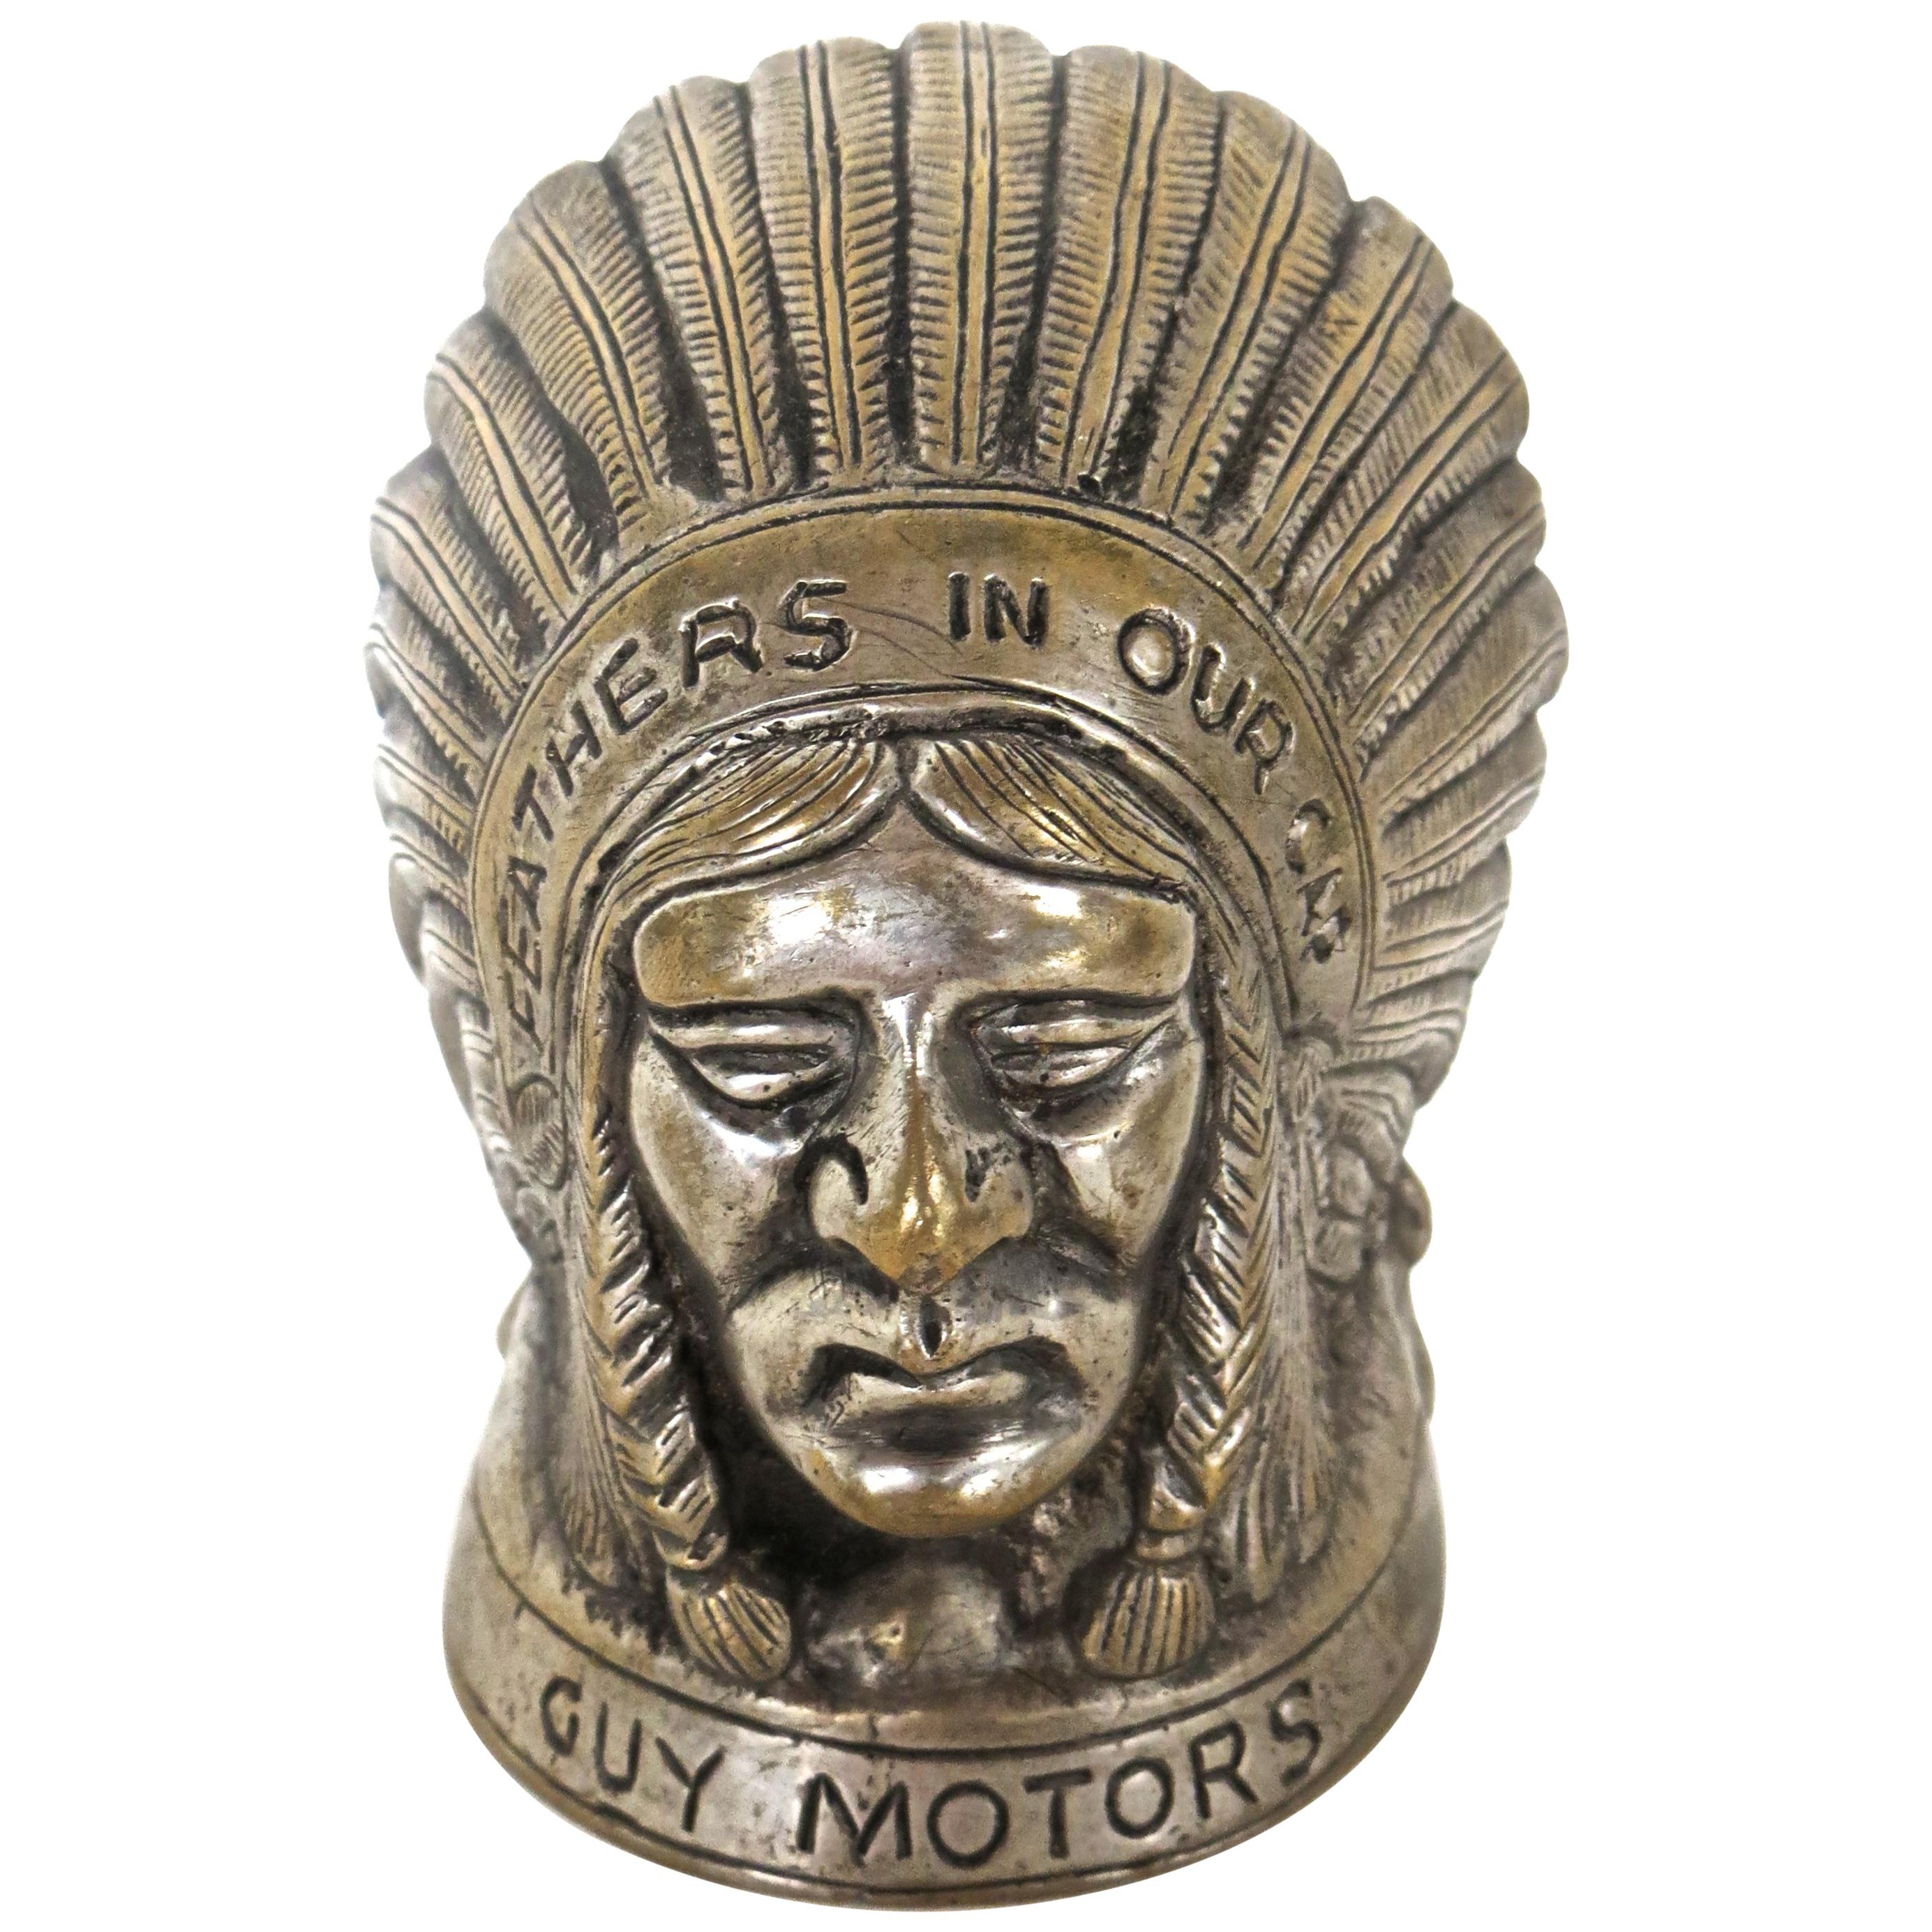 Indian Chief Hood Ornament Guy Motors. British, circa 1920s